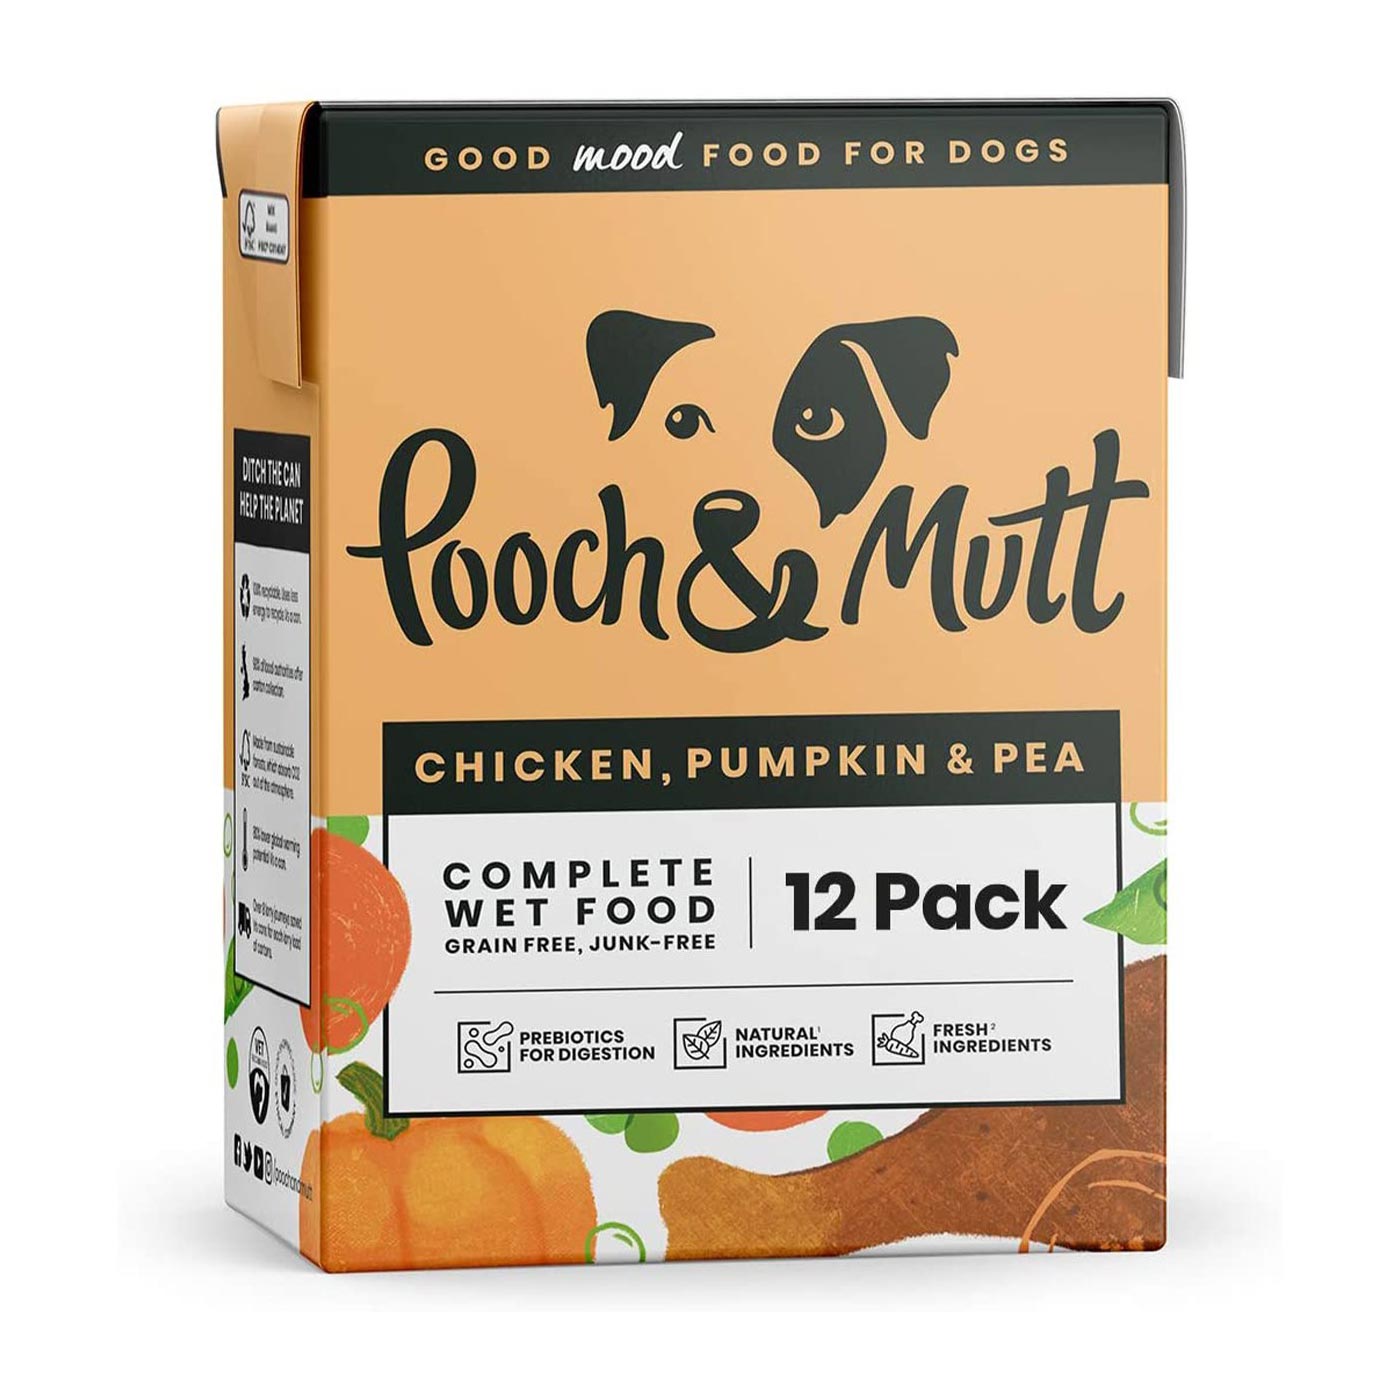 Pooch & Mutt Chicken, Pumpkin & Pea Dog Food